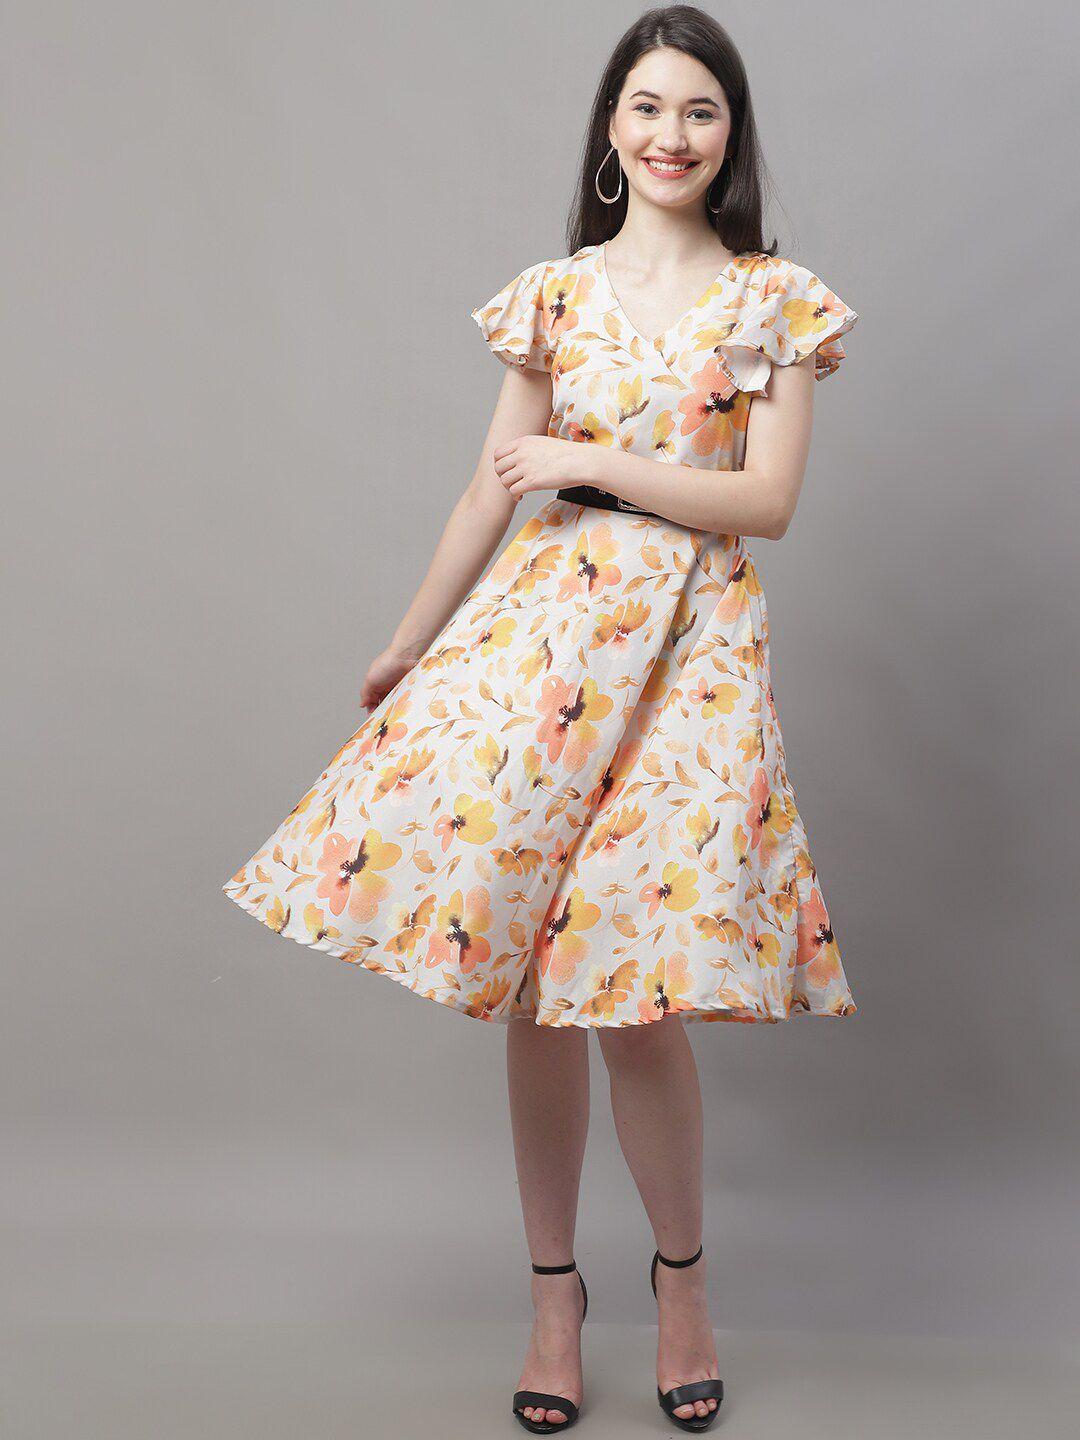 jainish floral print fit & flare dress